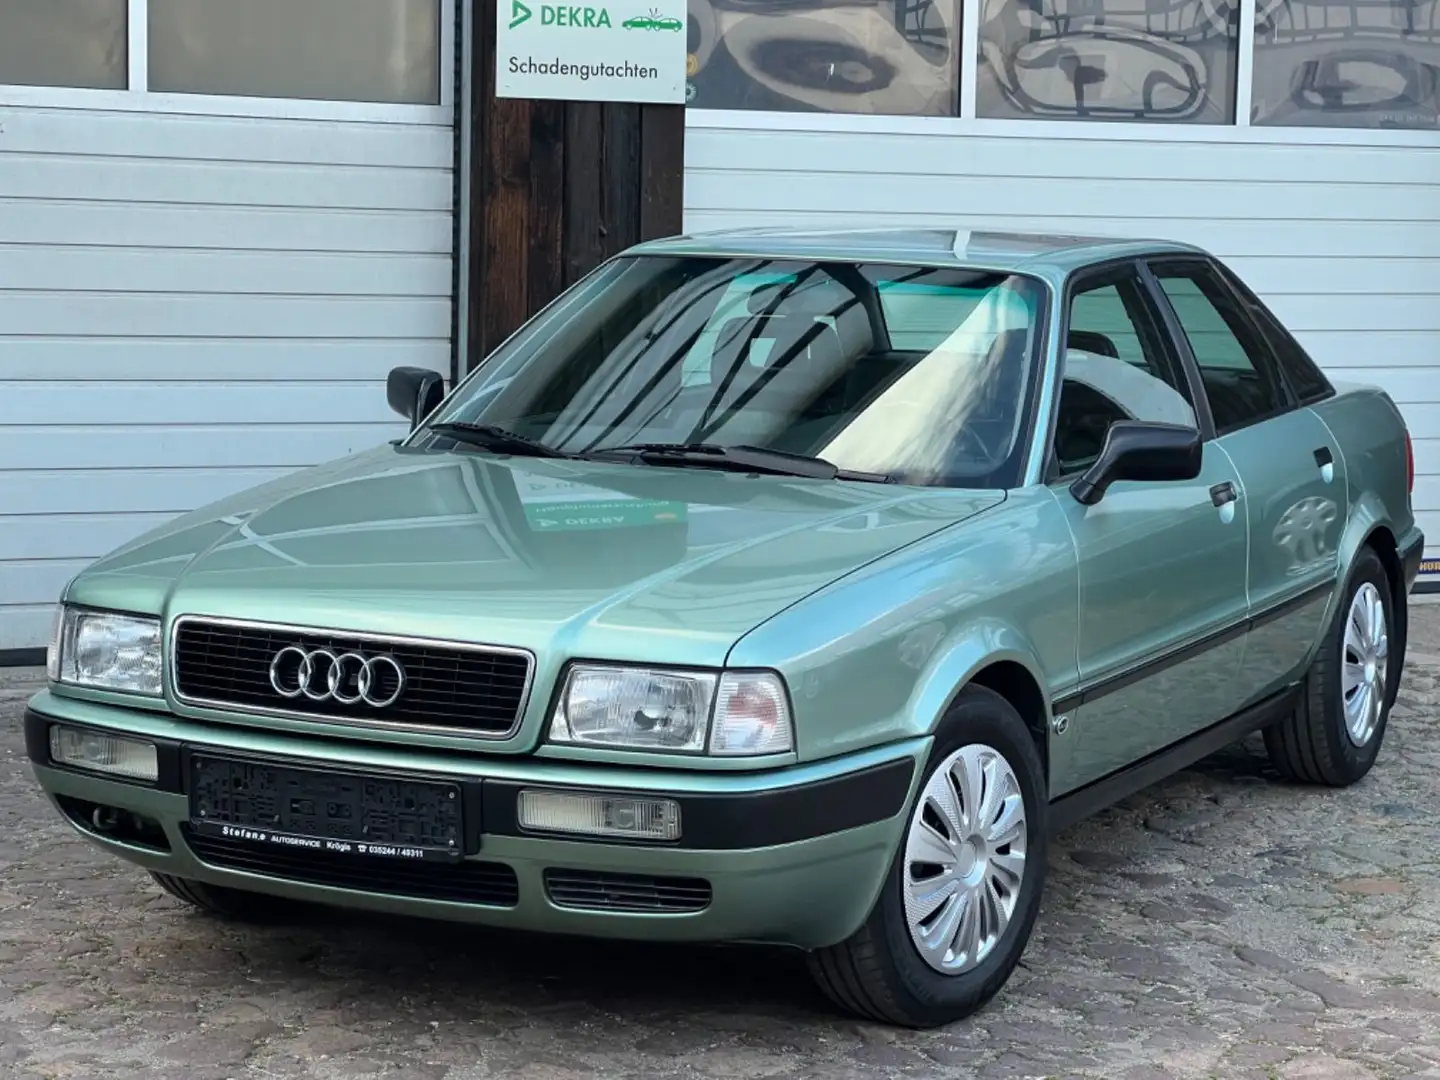 Audi 80 Green - 2